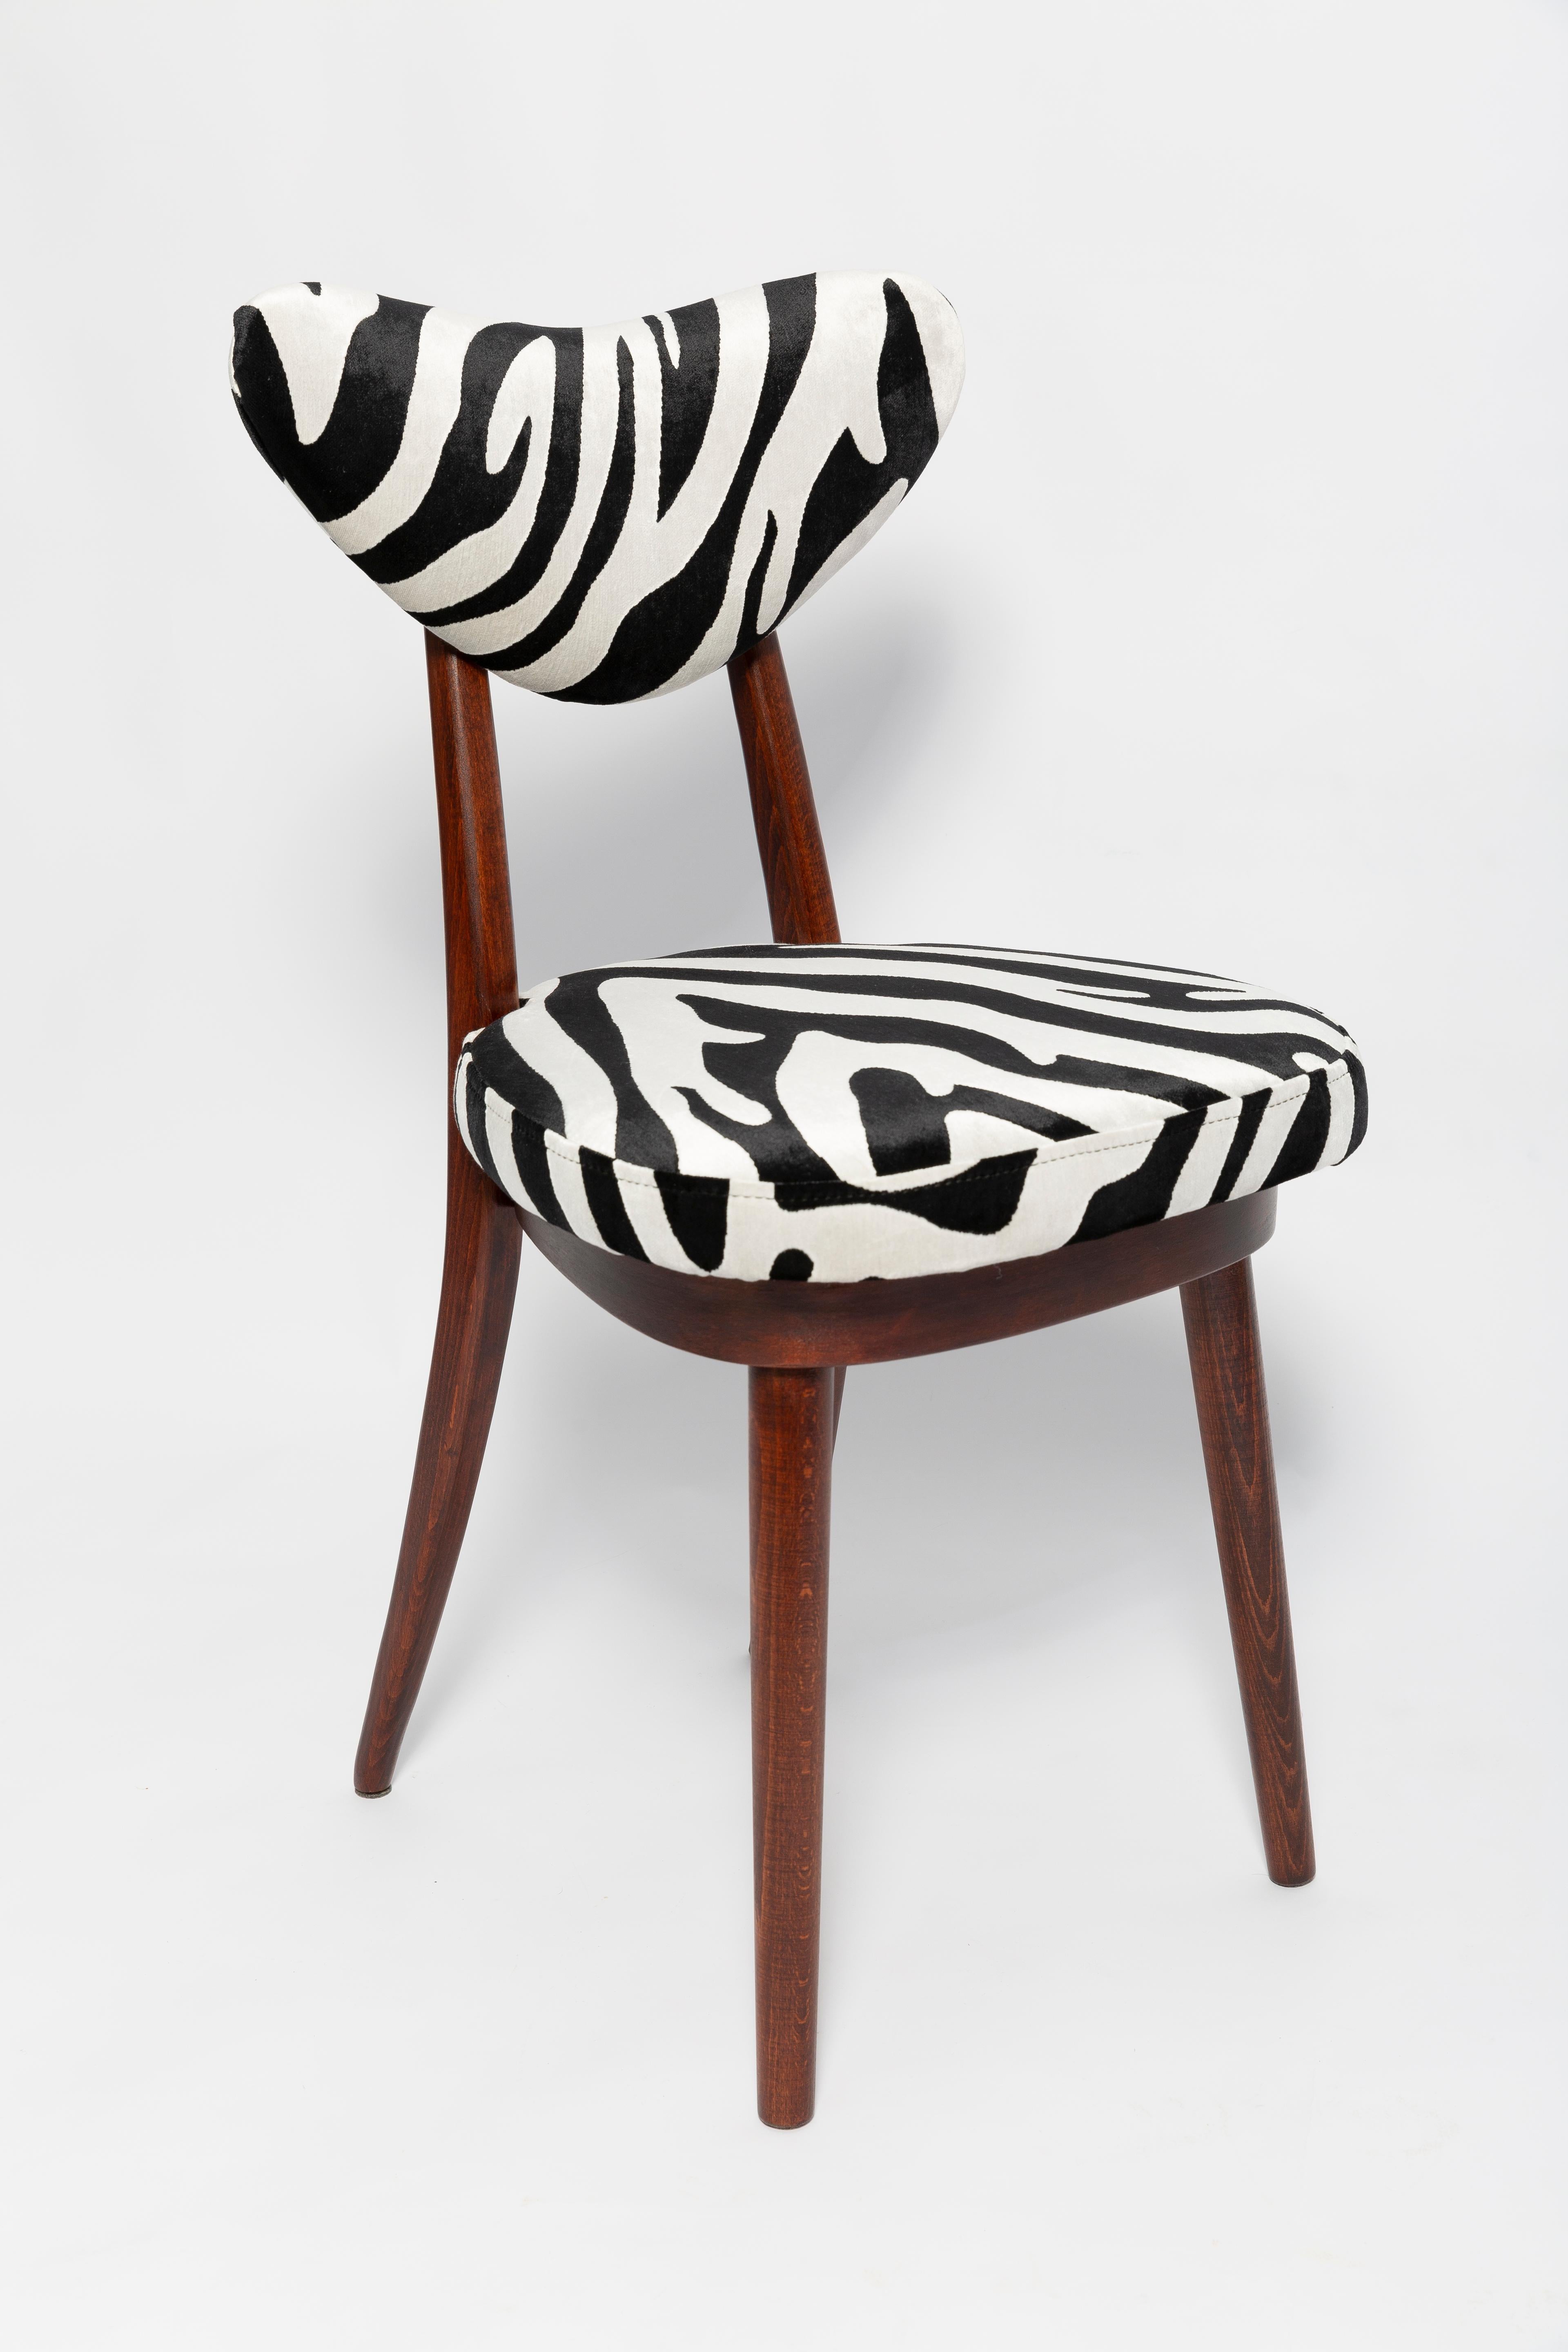 Mid-Century Modern Midcentury Regency Zebra Black and White Heart Chair, Poland, 1960s For Sale